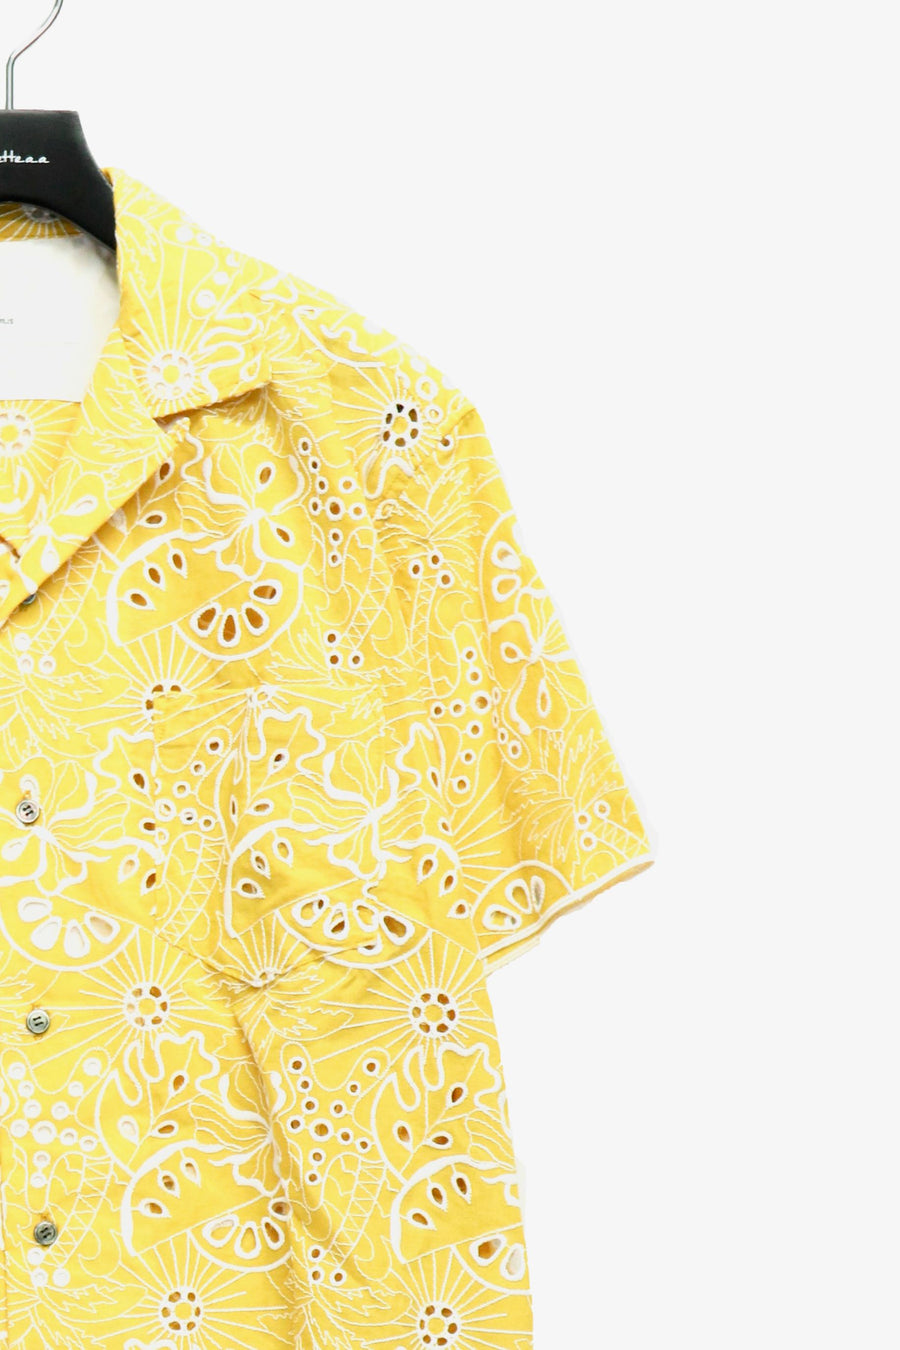 TOGA VIRILIS  Cotton Embroidery S/S shirt(YELLOW)